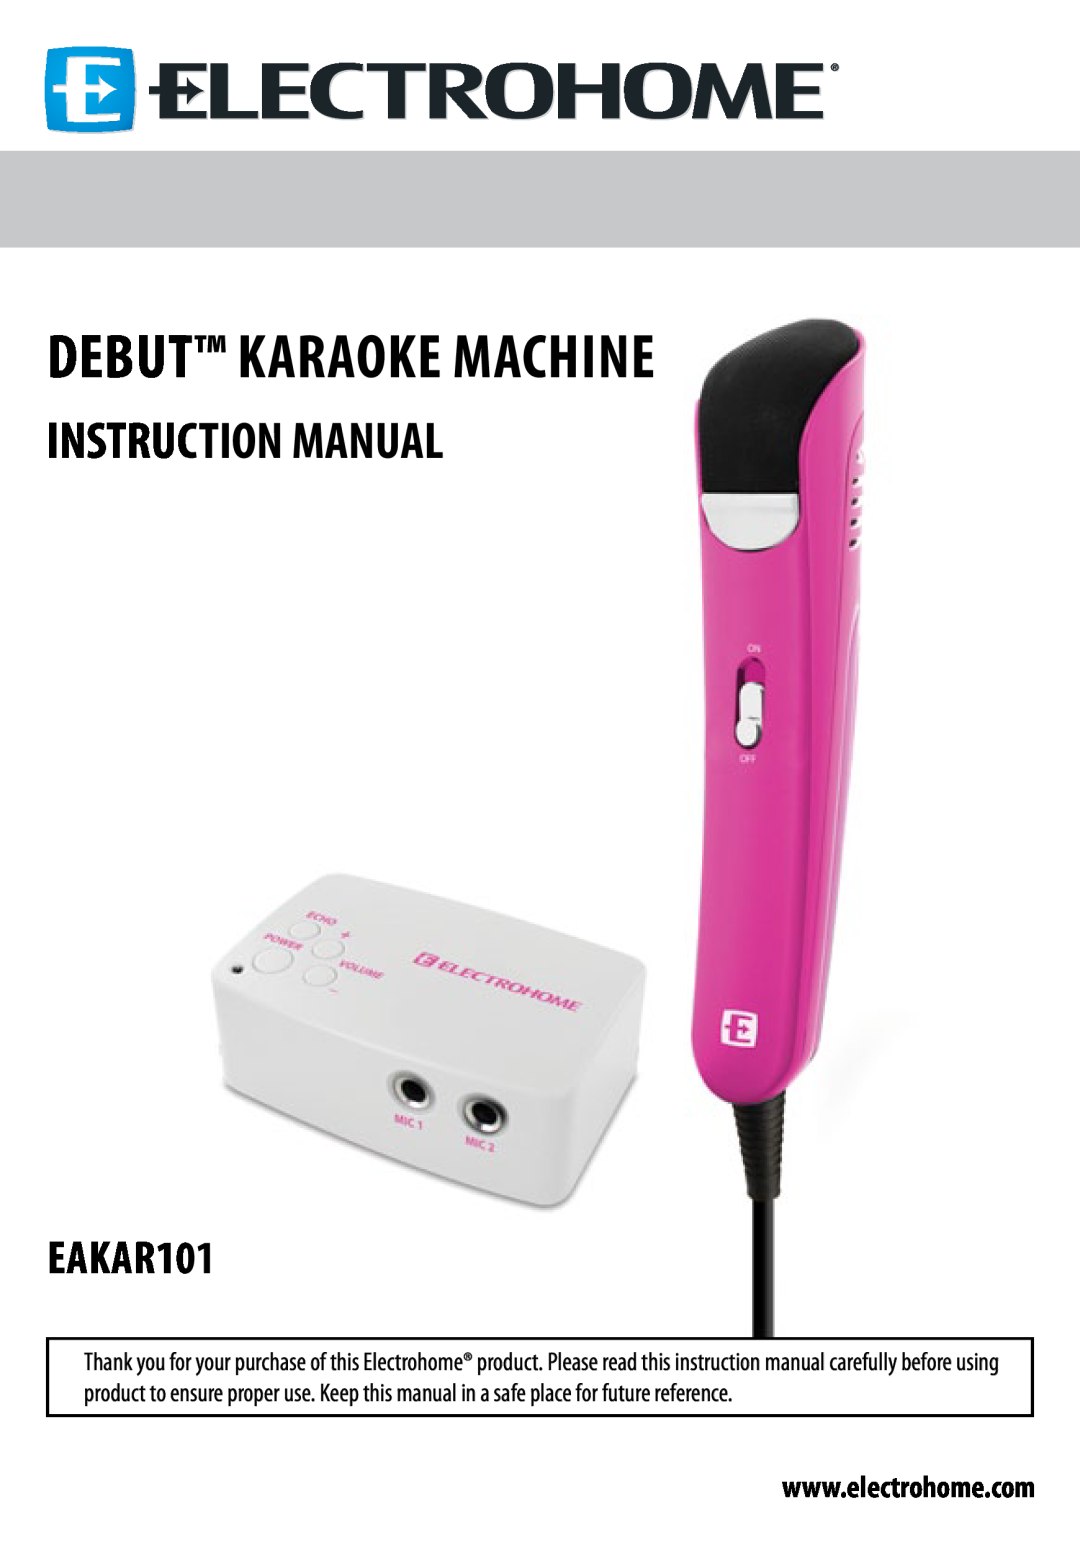 Electrohome EAKAR101 instruction manual Debut Karaoke Machine 